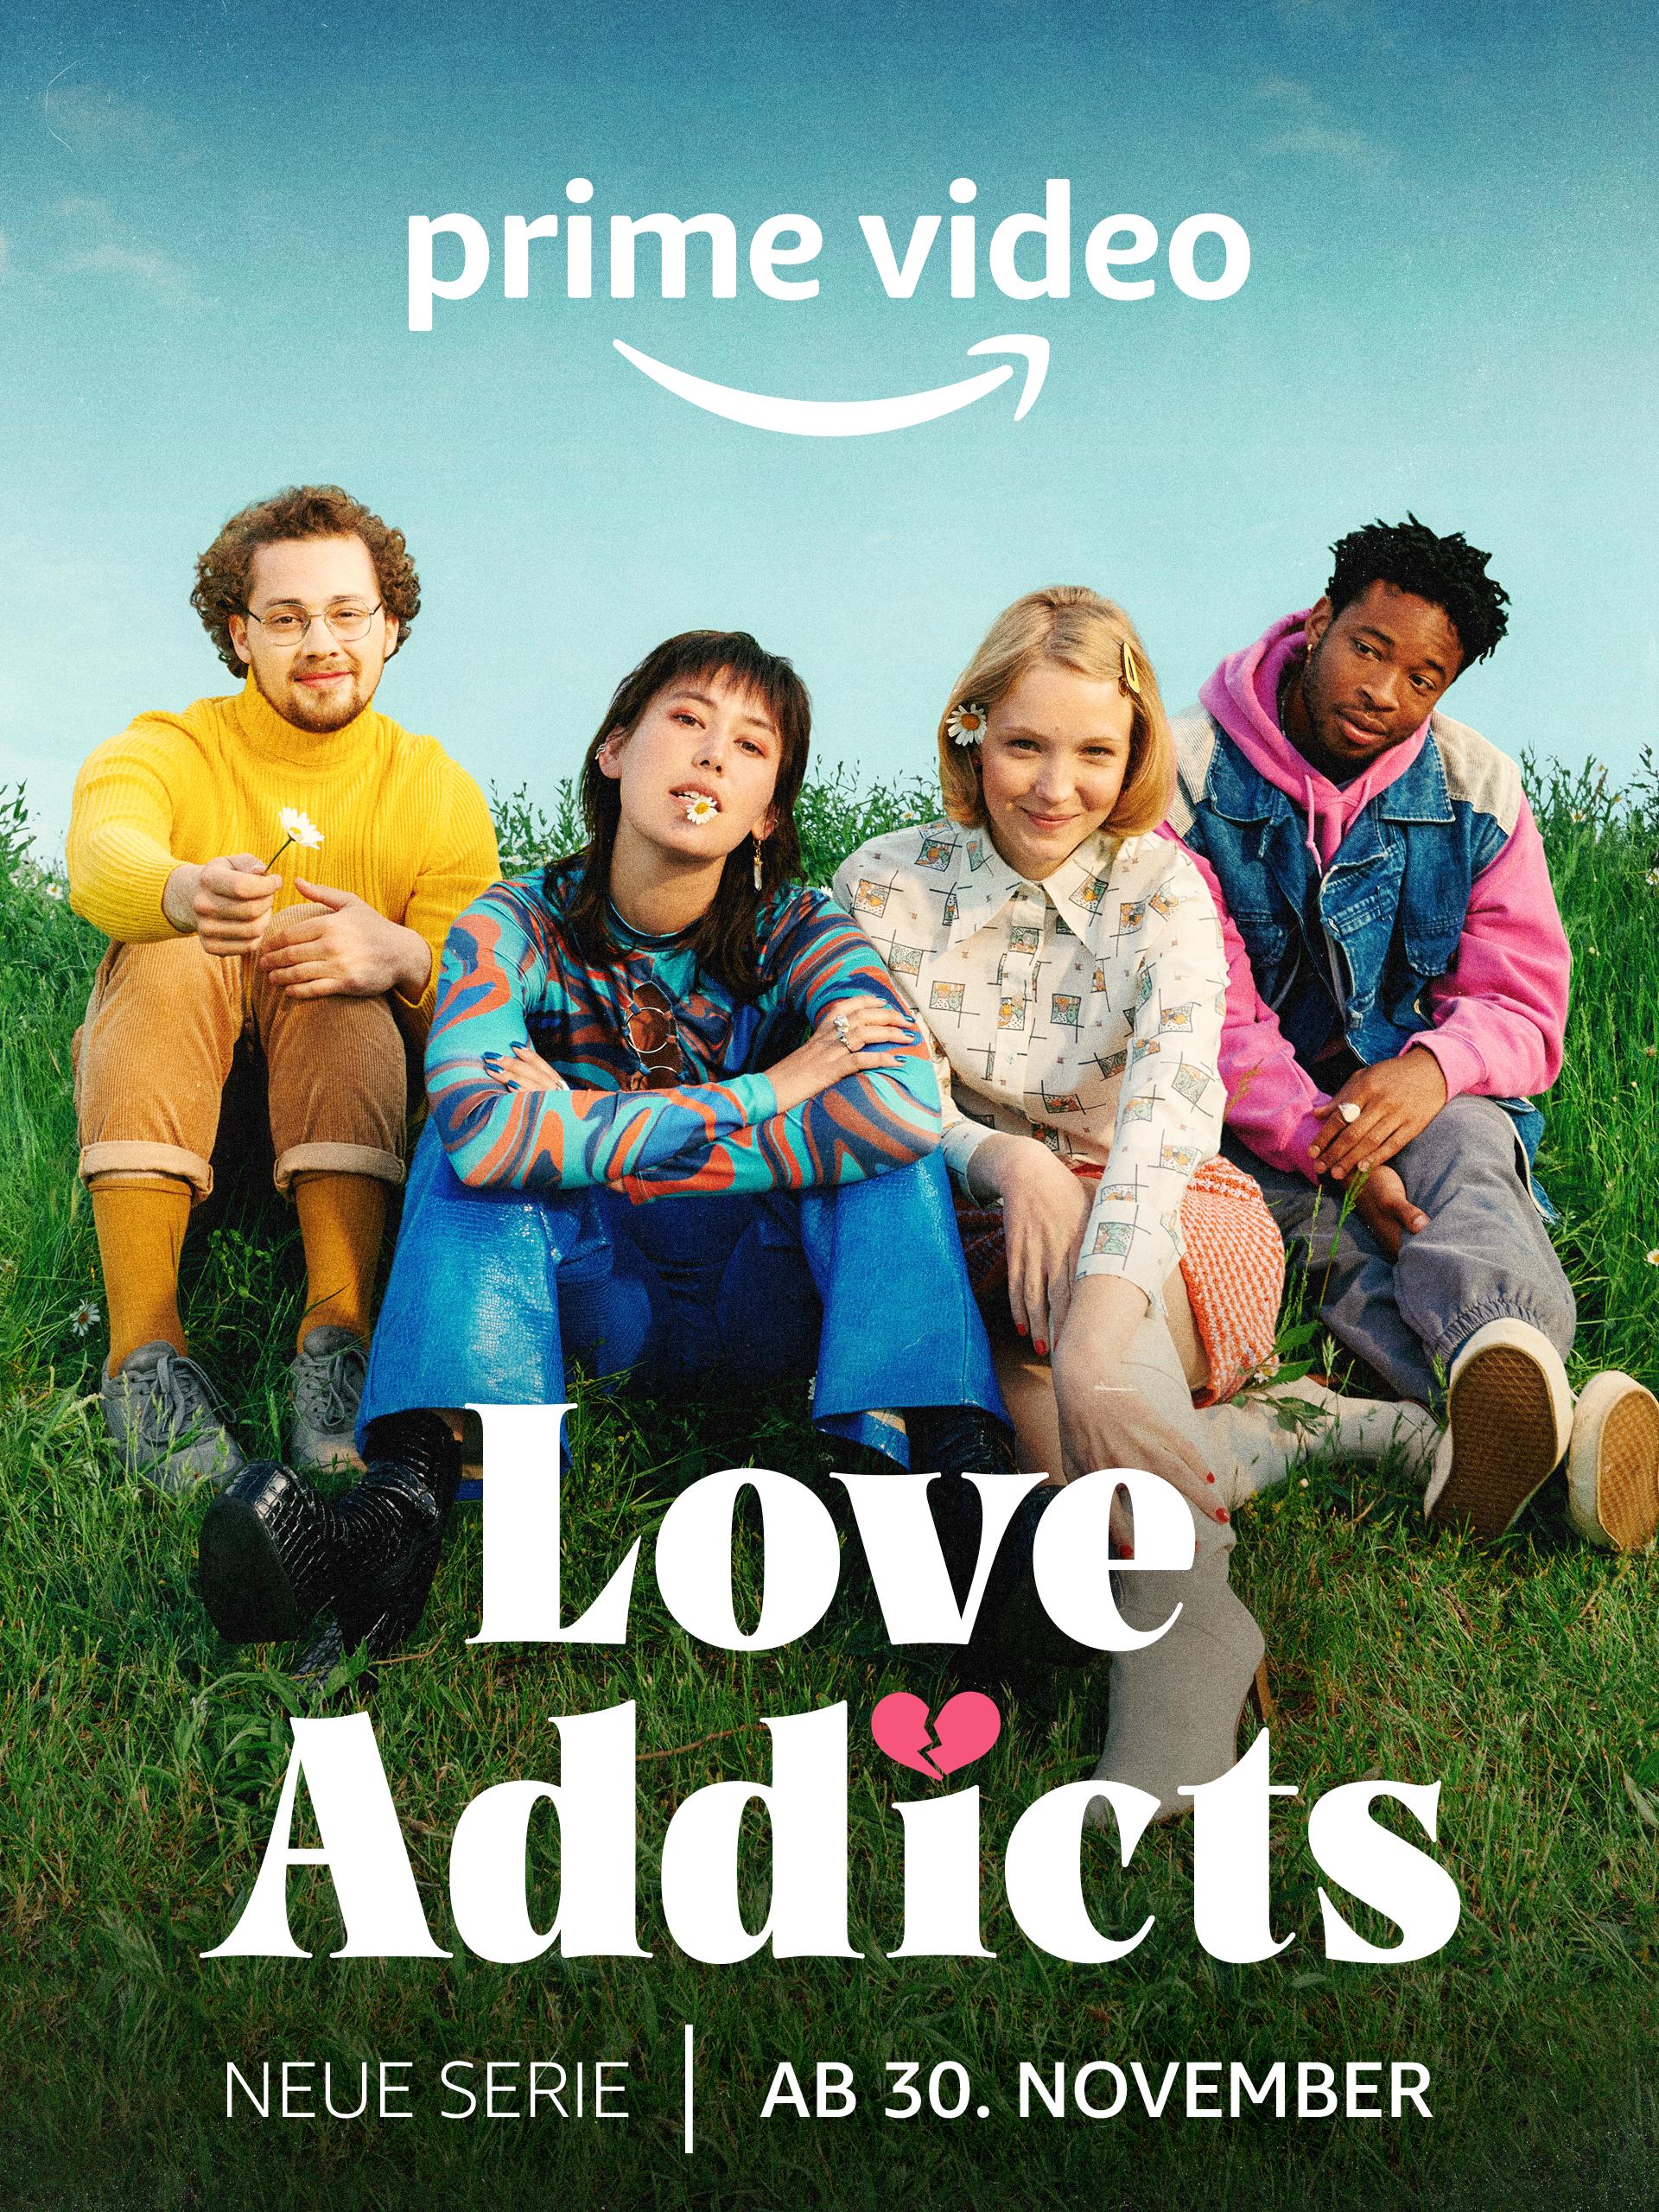 Love Addicts (2022)